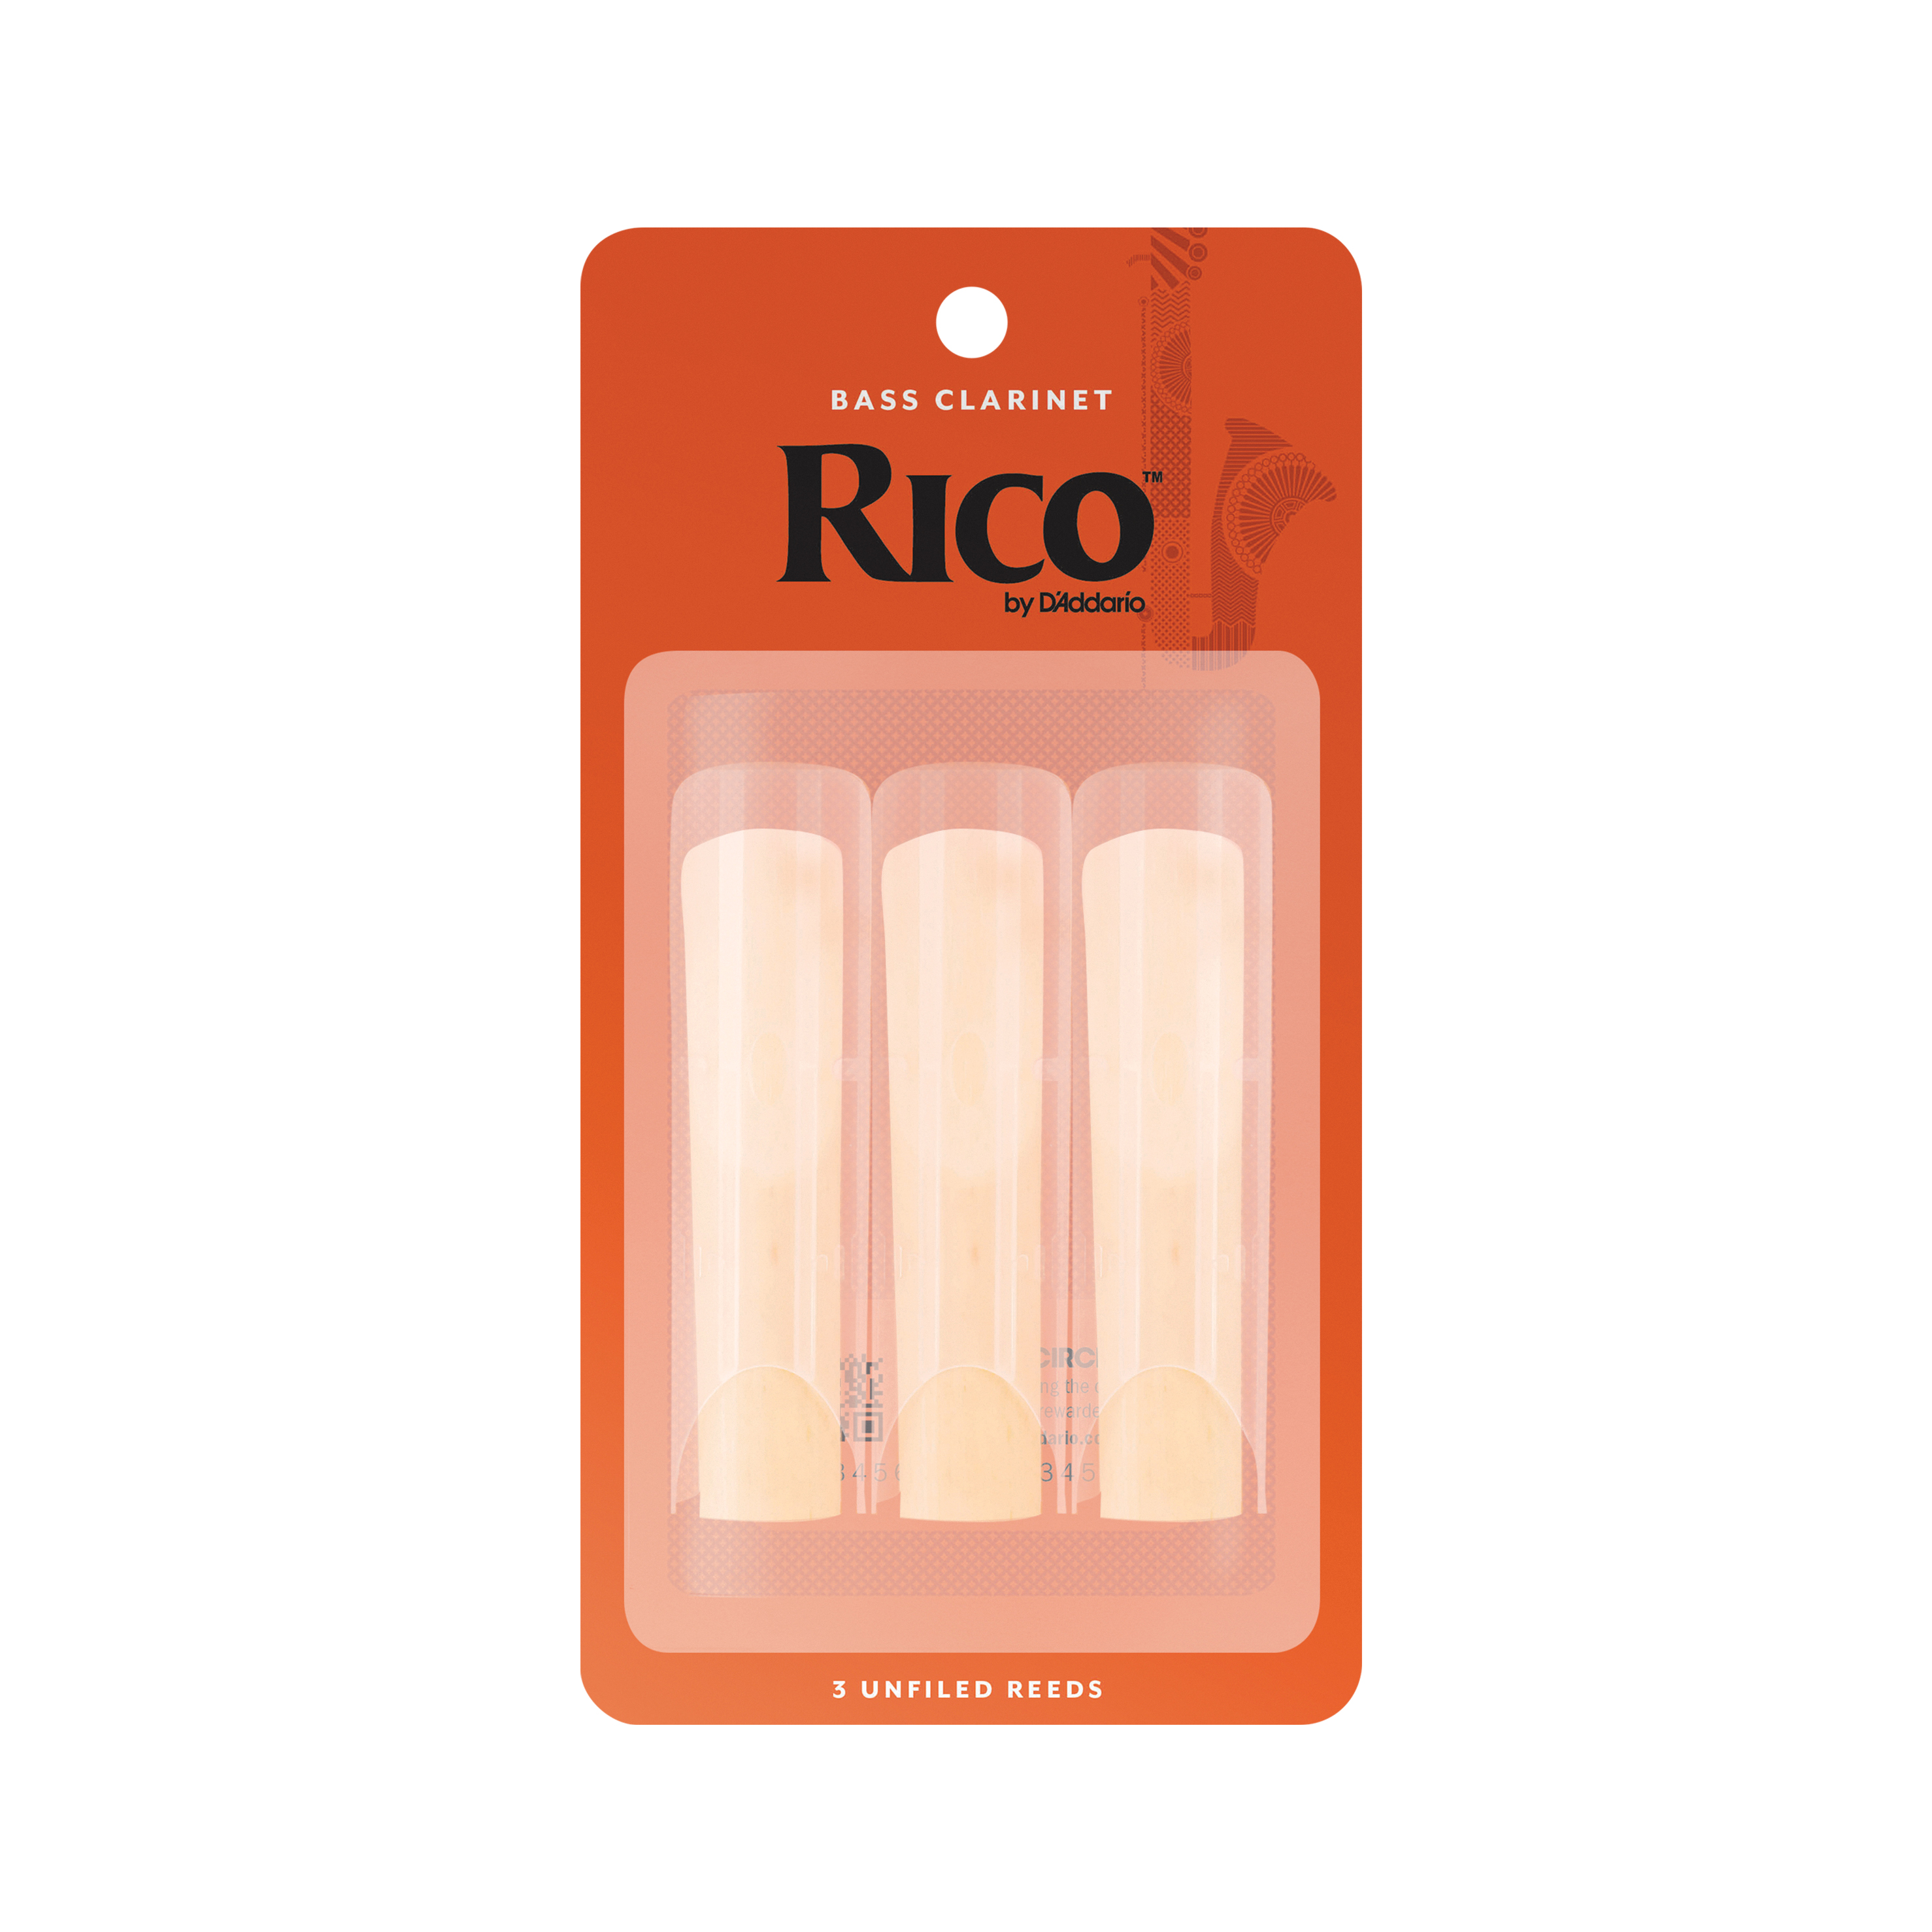 Orange three pack of Rico by D'addario Bass Clarinet Reeds